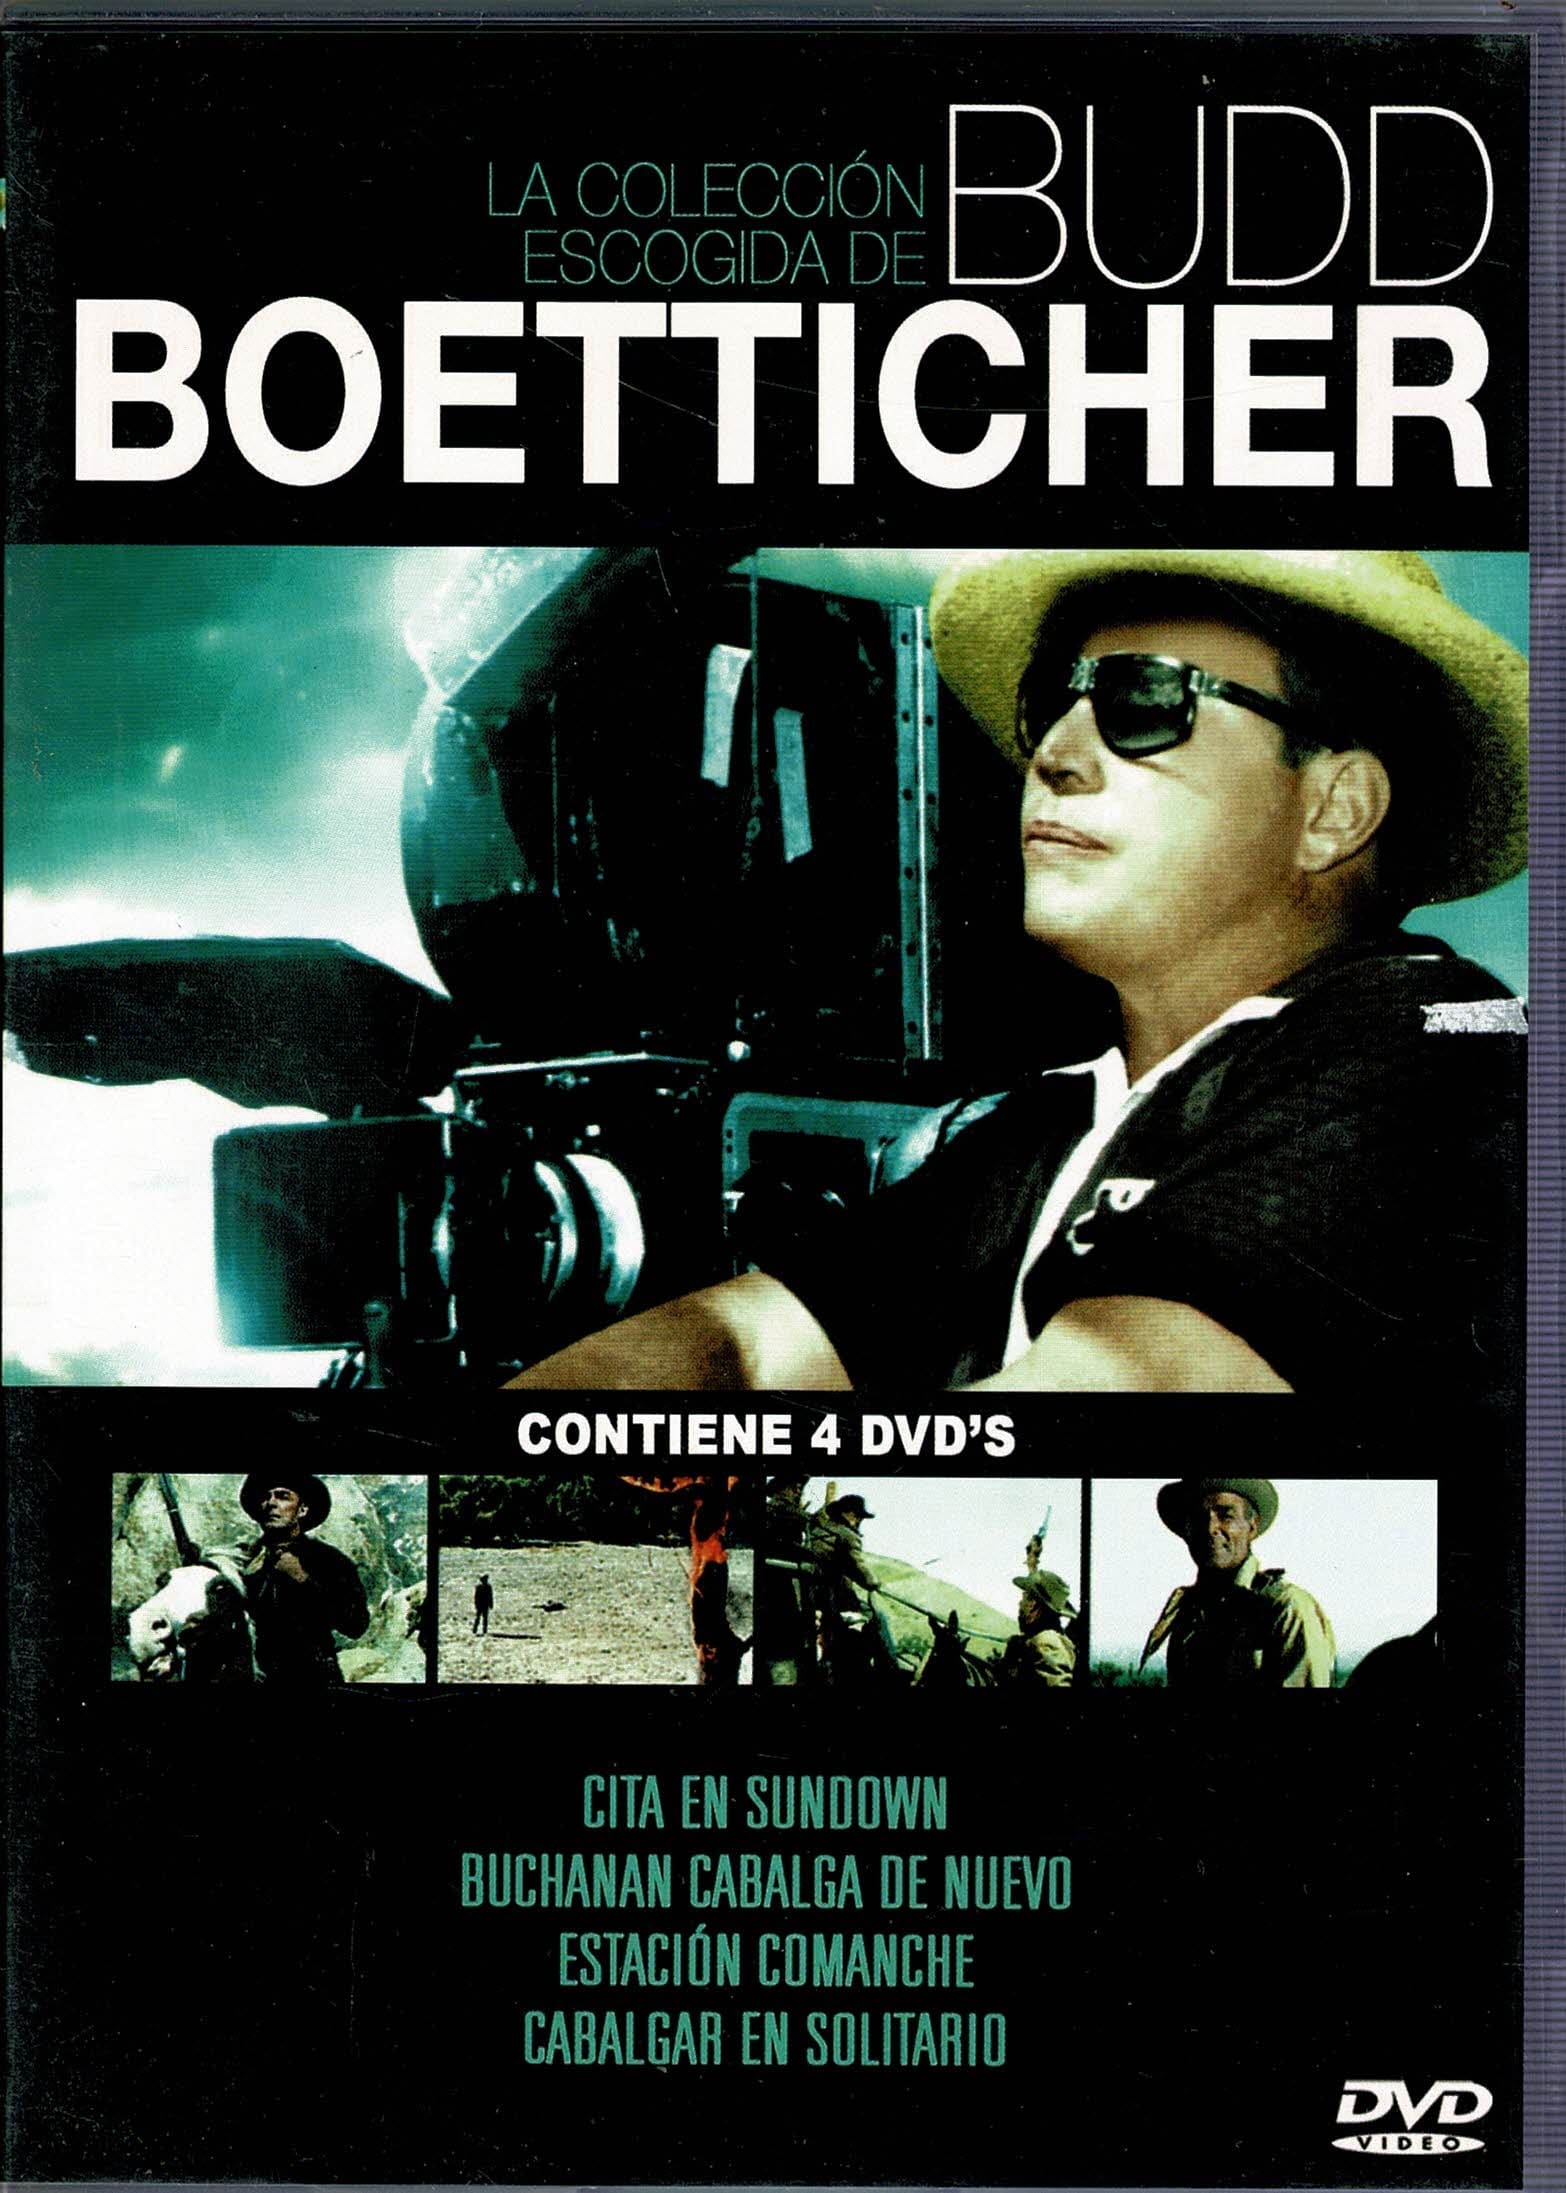 Budd Boetticher: A Man Can Do That